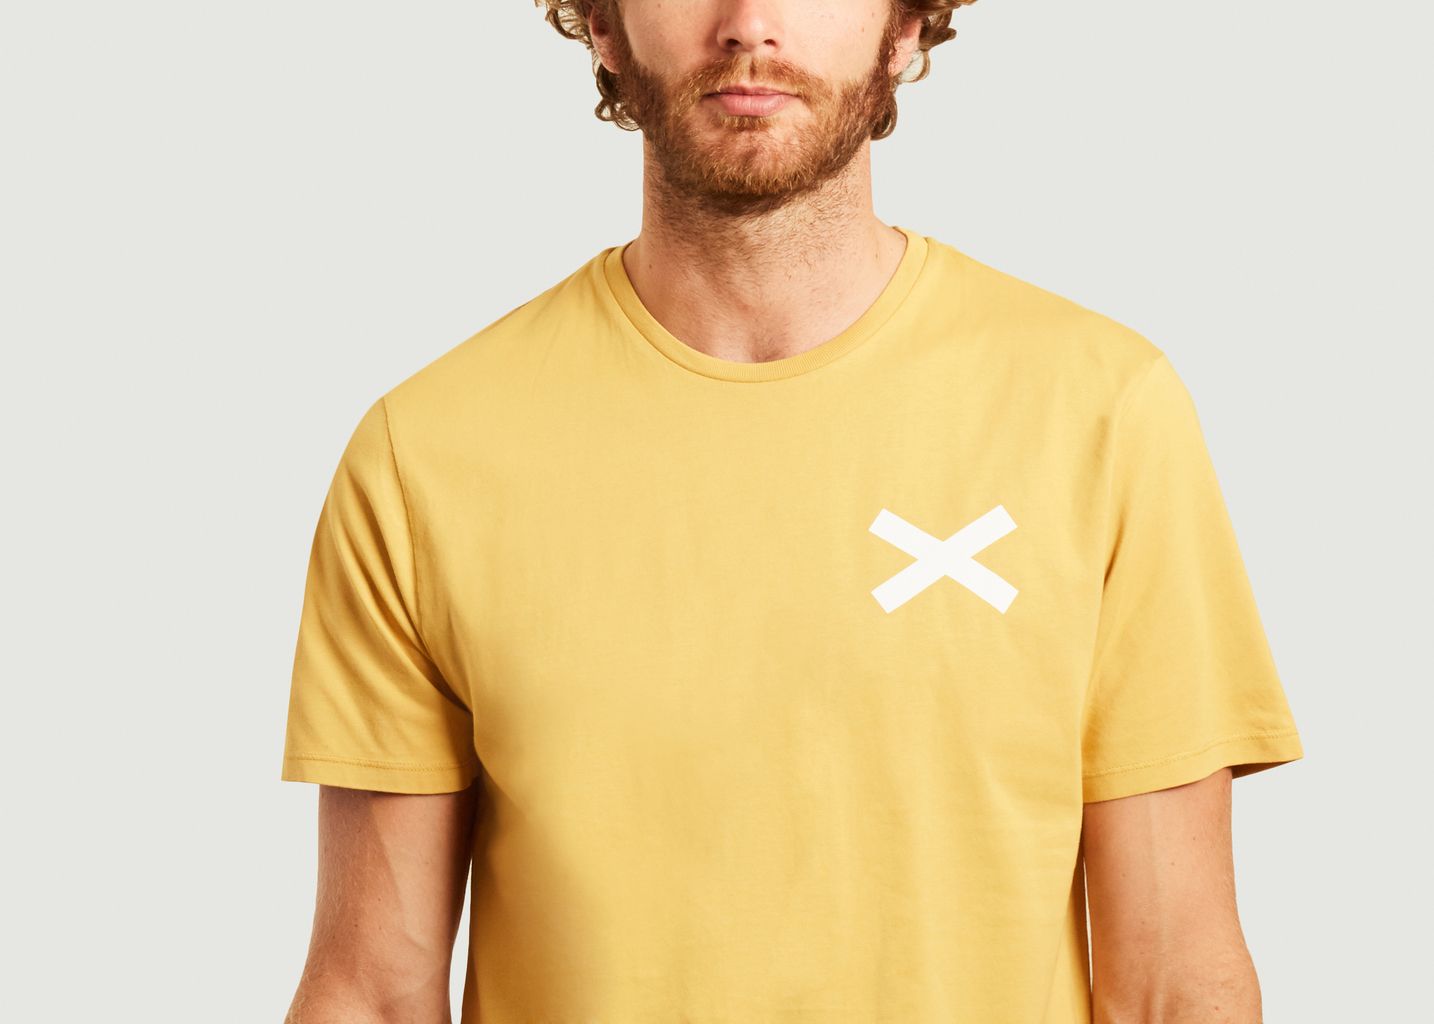 Cross t-shirt - Edmmond Studios